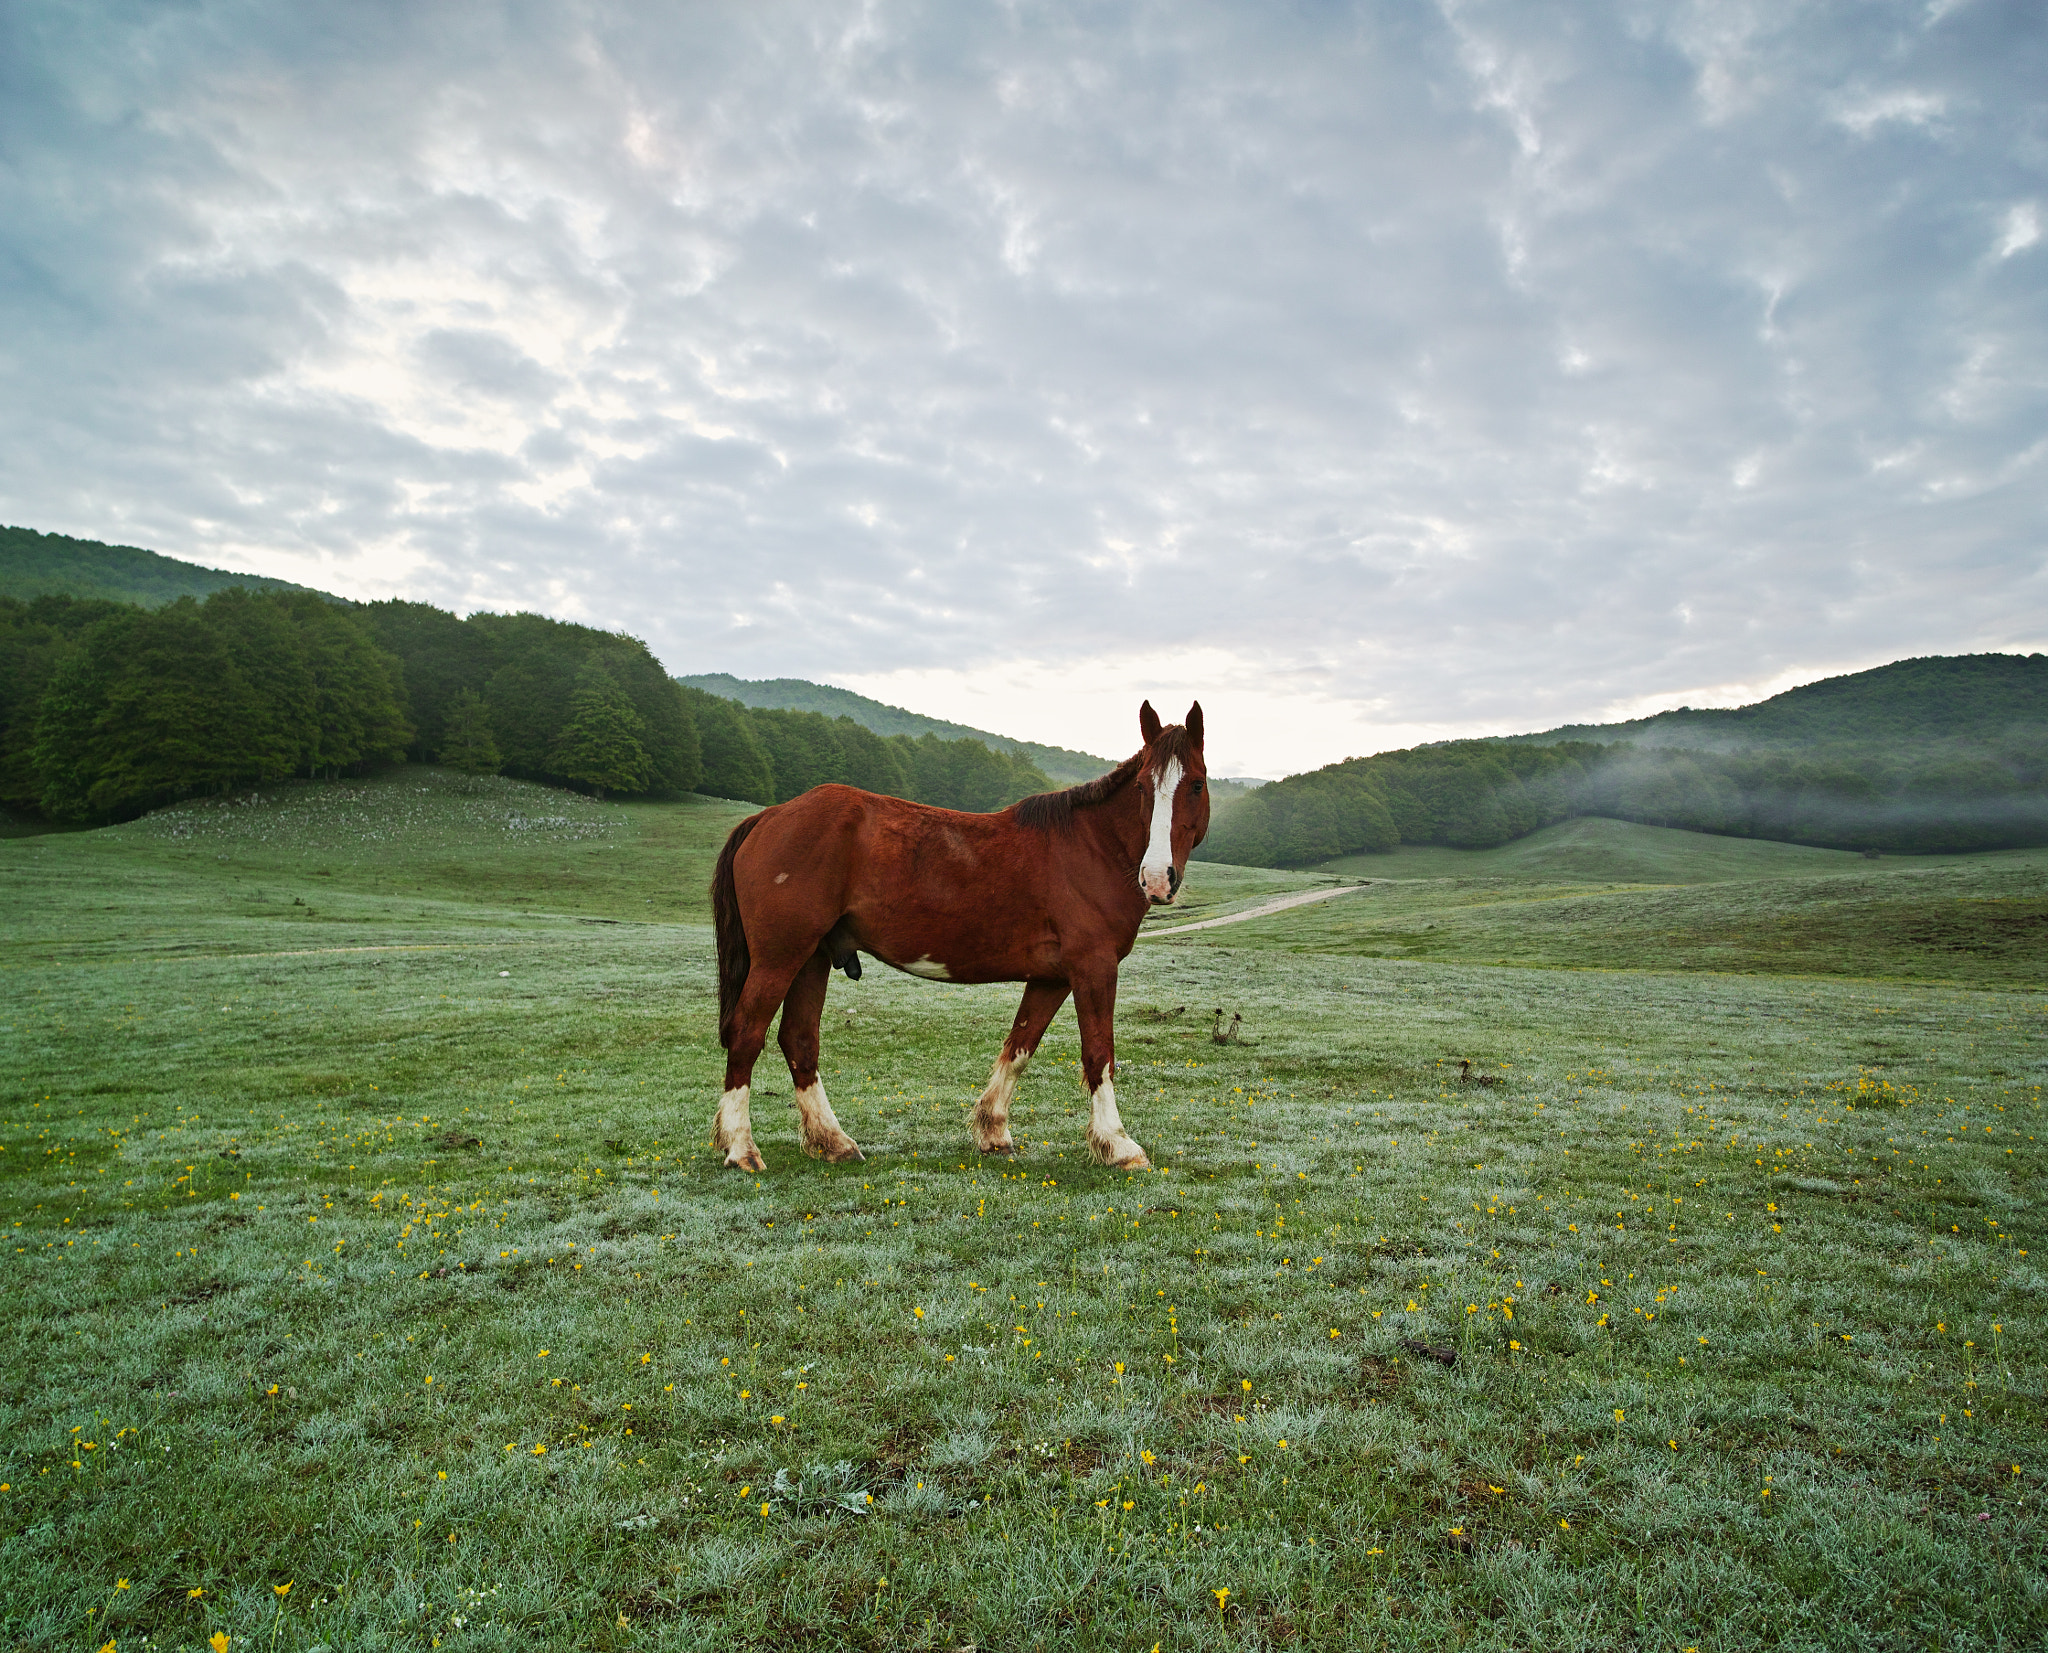 Sigma dp0 Quattro sample photo. "wild horse" photography